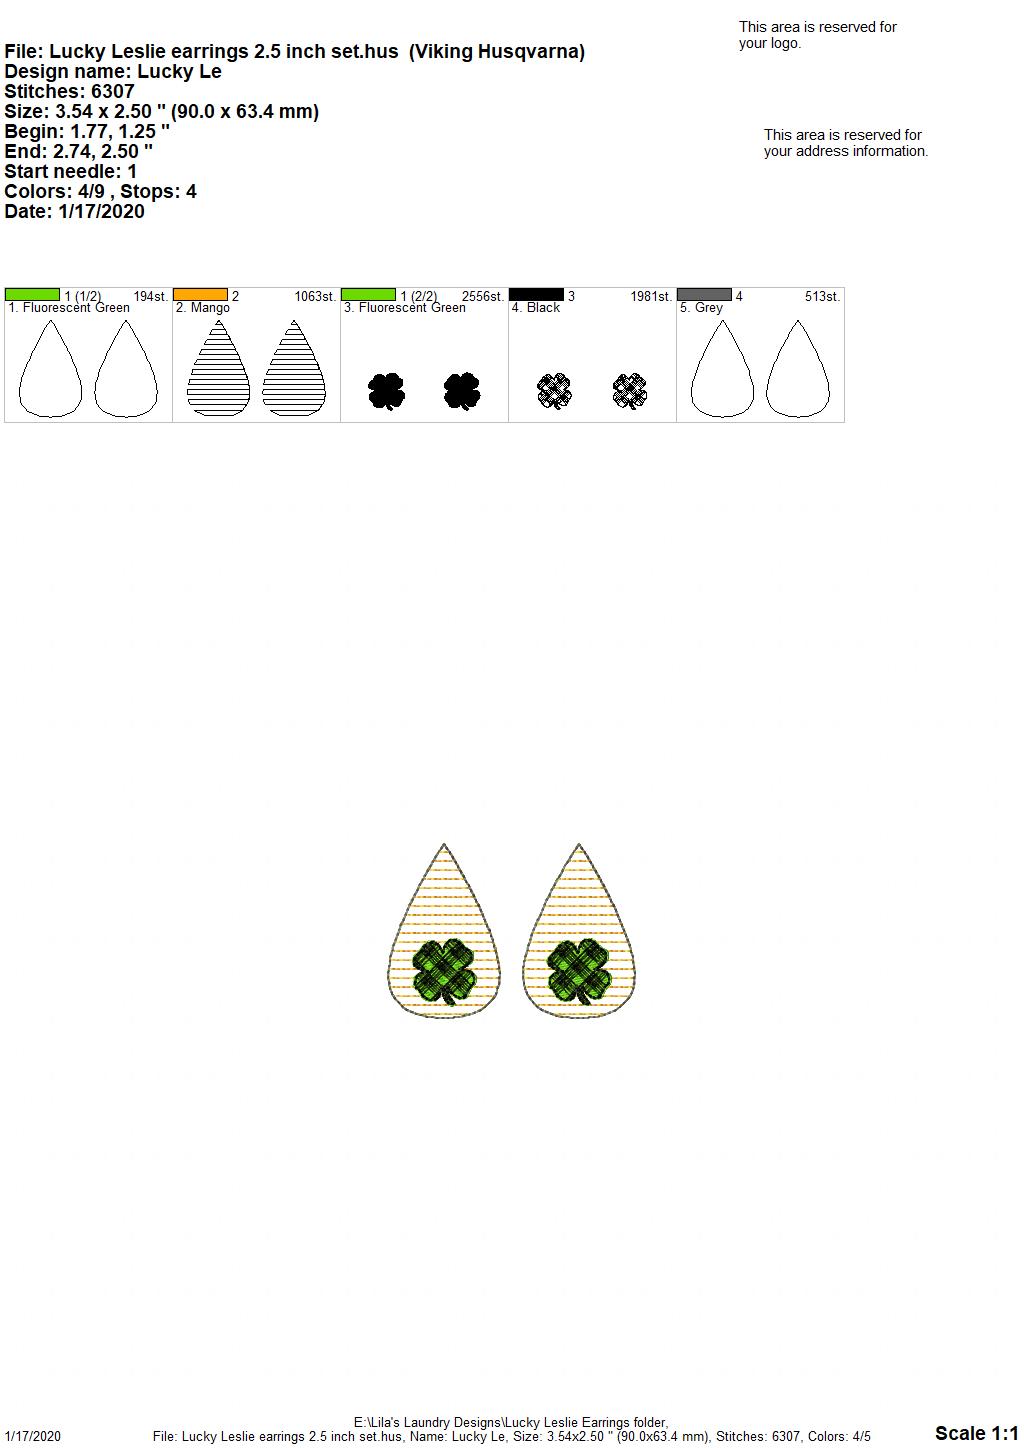 Lucky Leslie Earrings - 3 sizes - Digital Embroidery Design